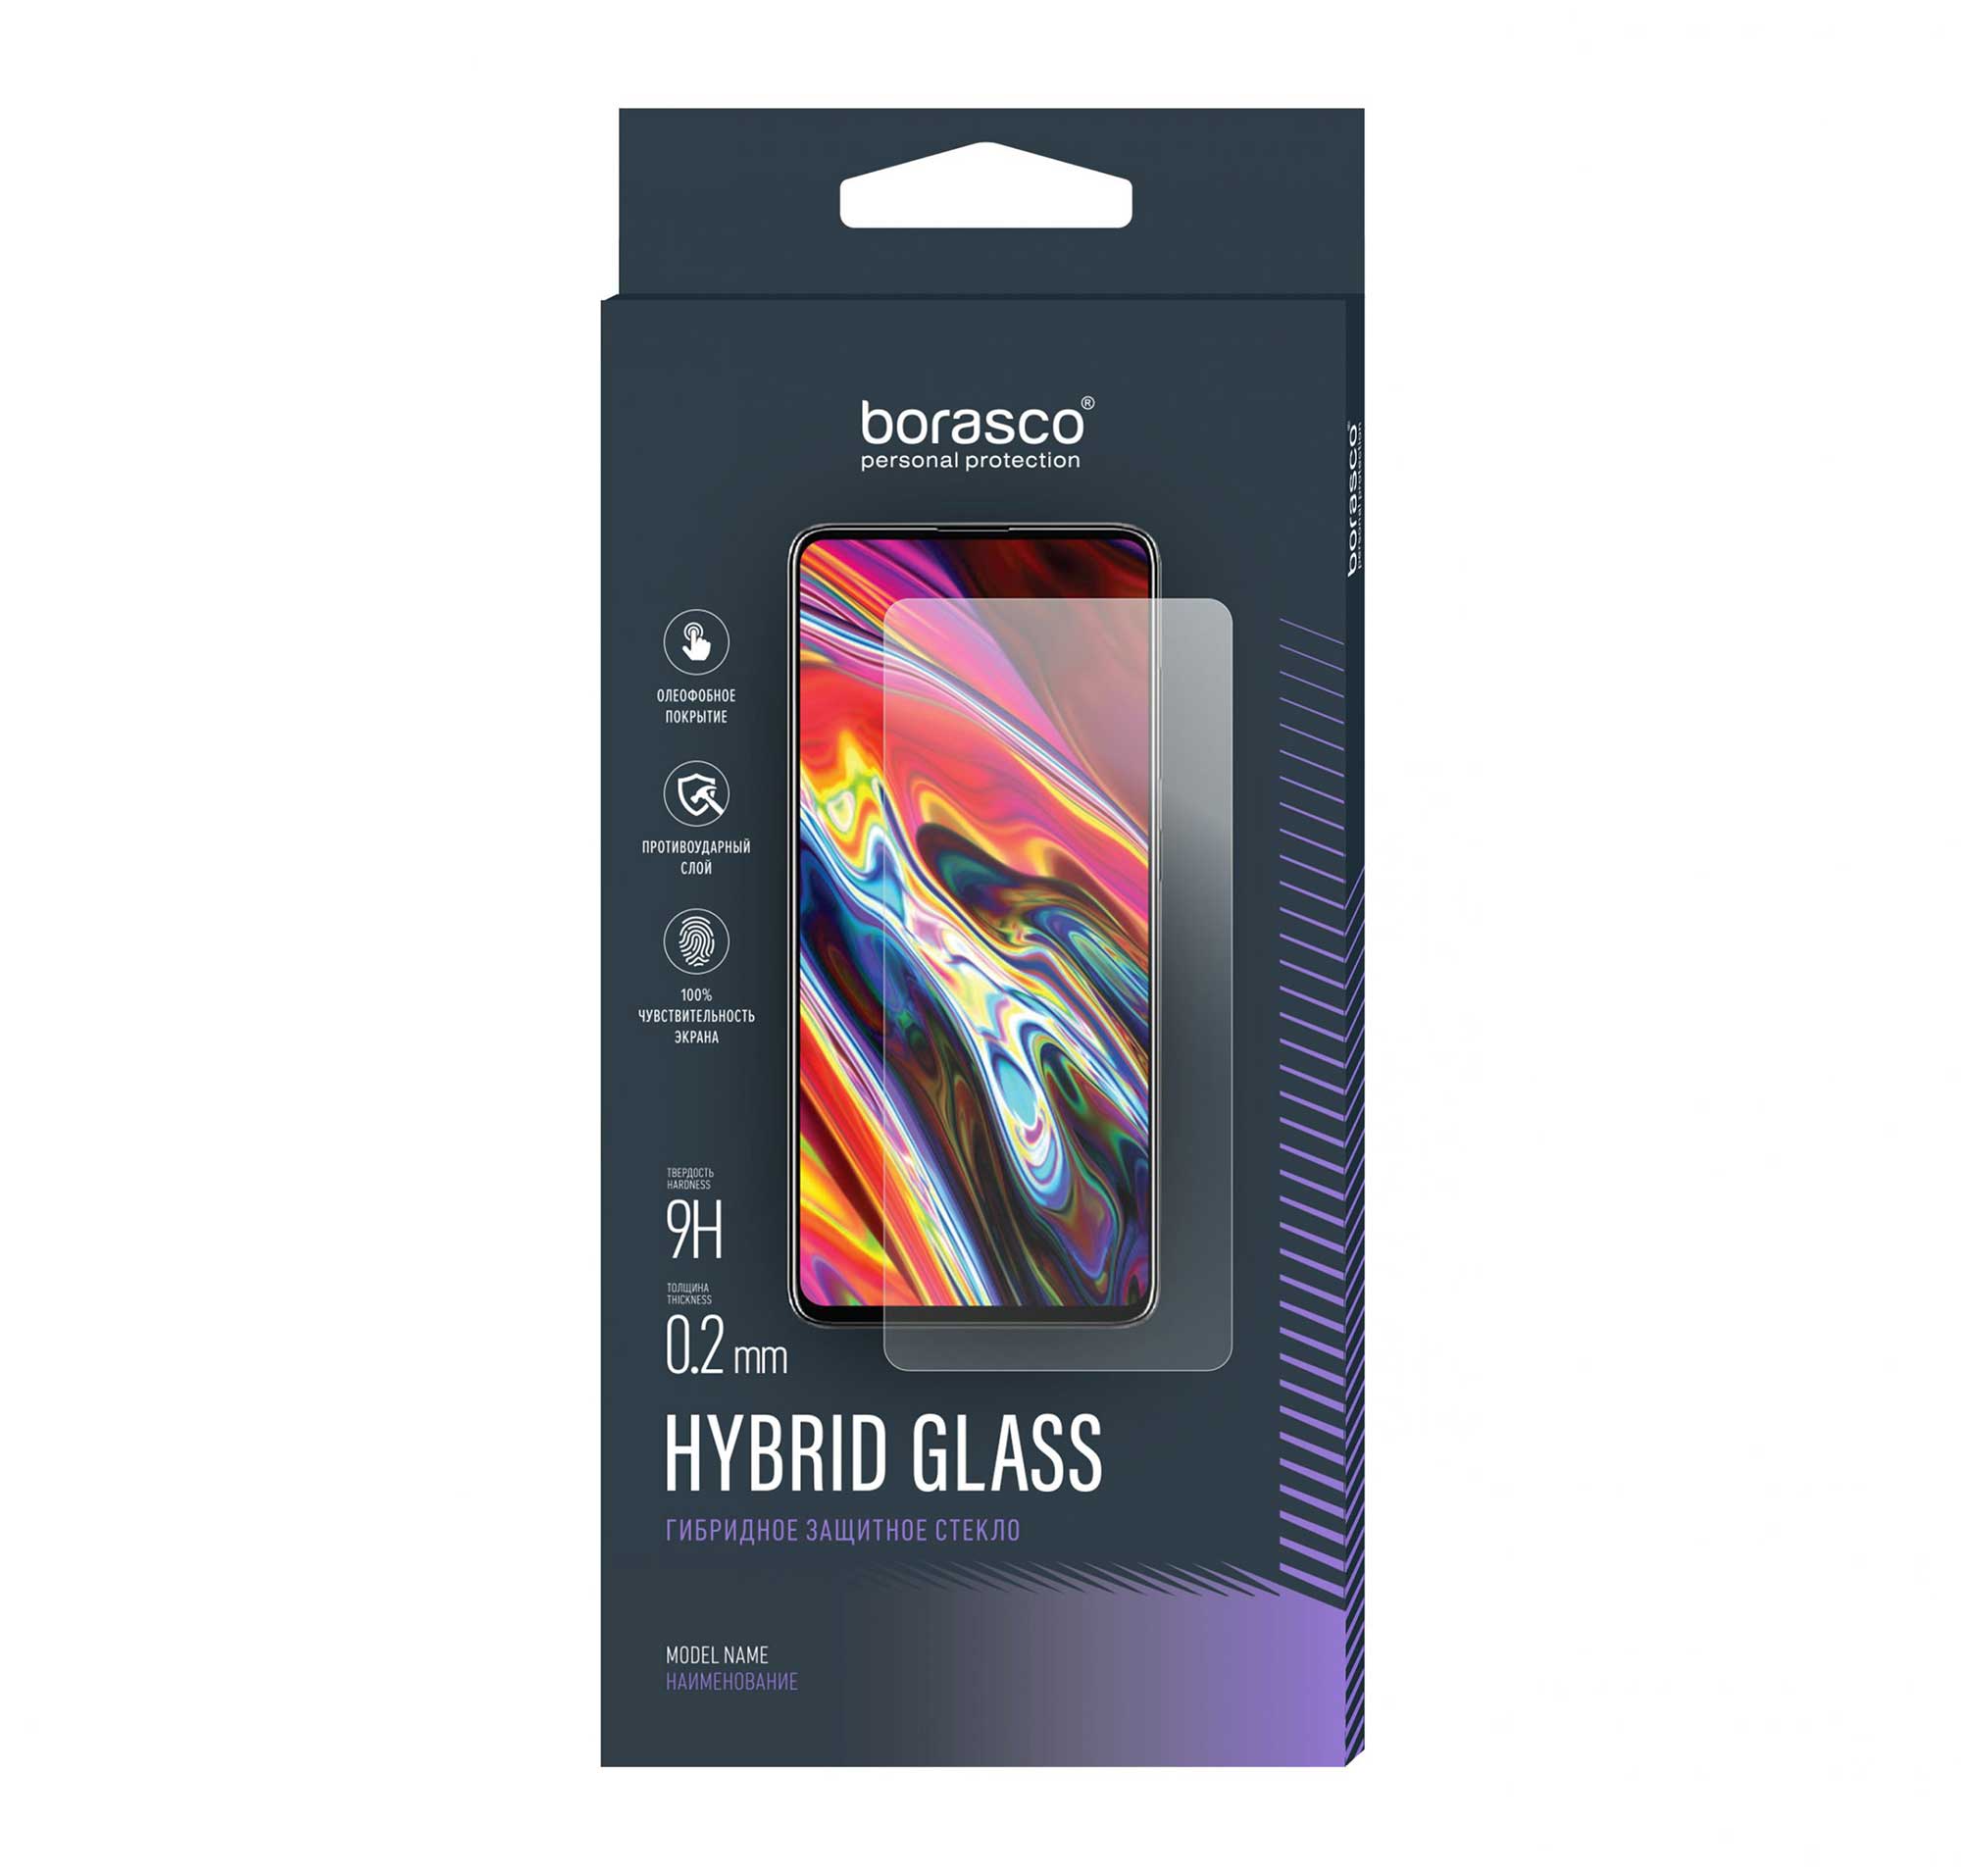 Защитное стекло Hybrid Glass для Itel Vision 1 Pro защитное стекло borasco hybrid glass для itel vision 3 глянец